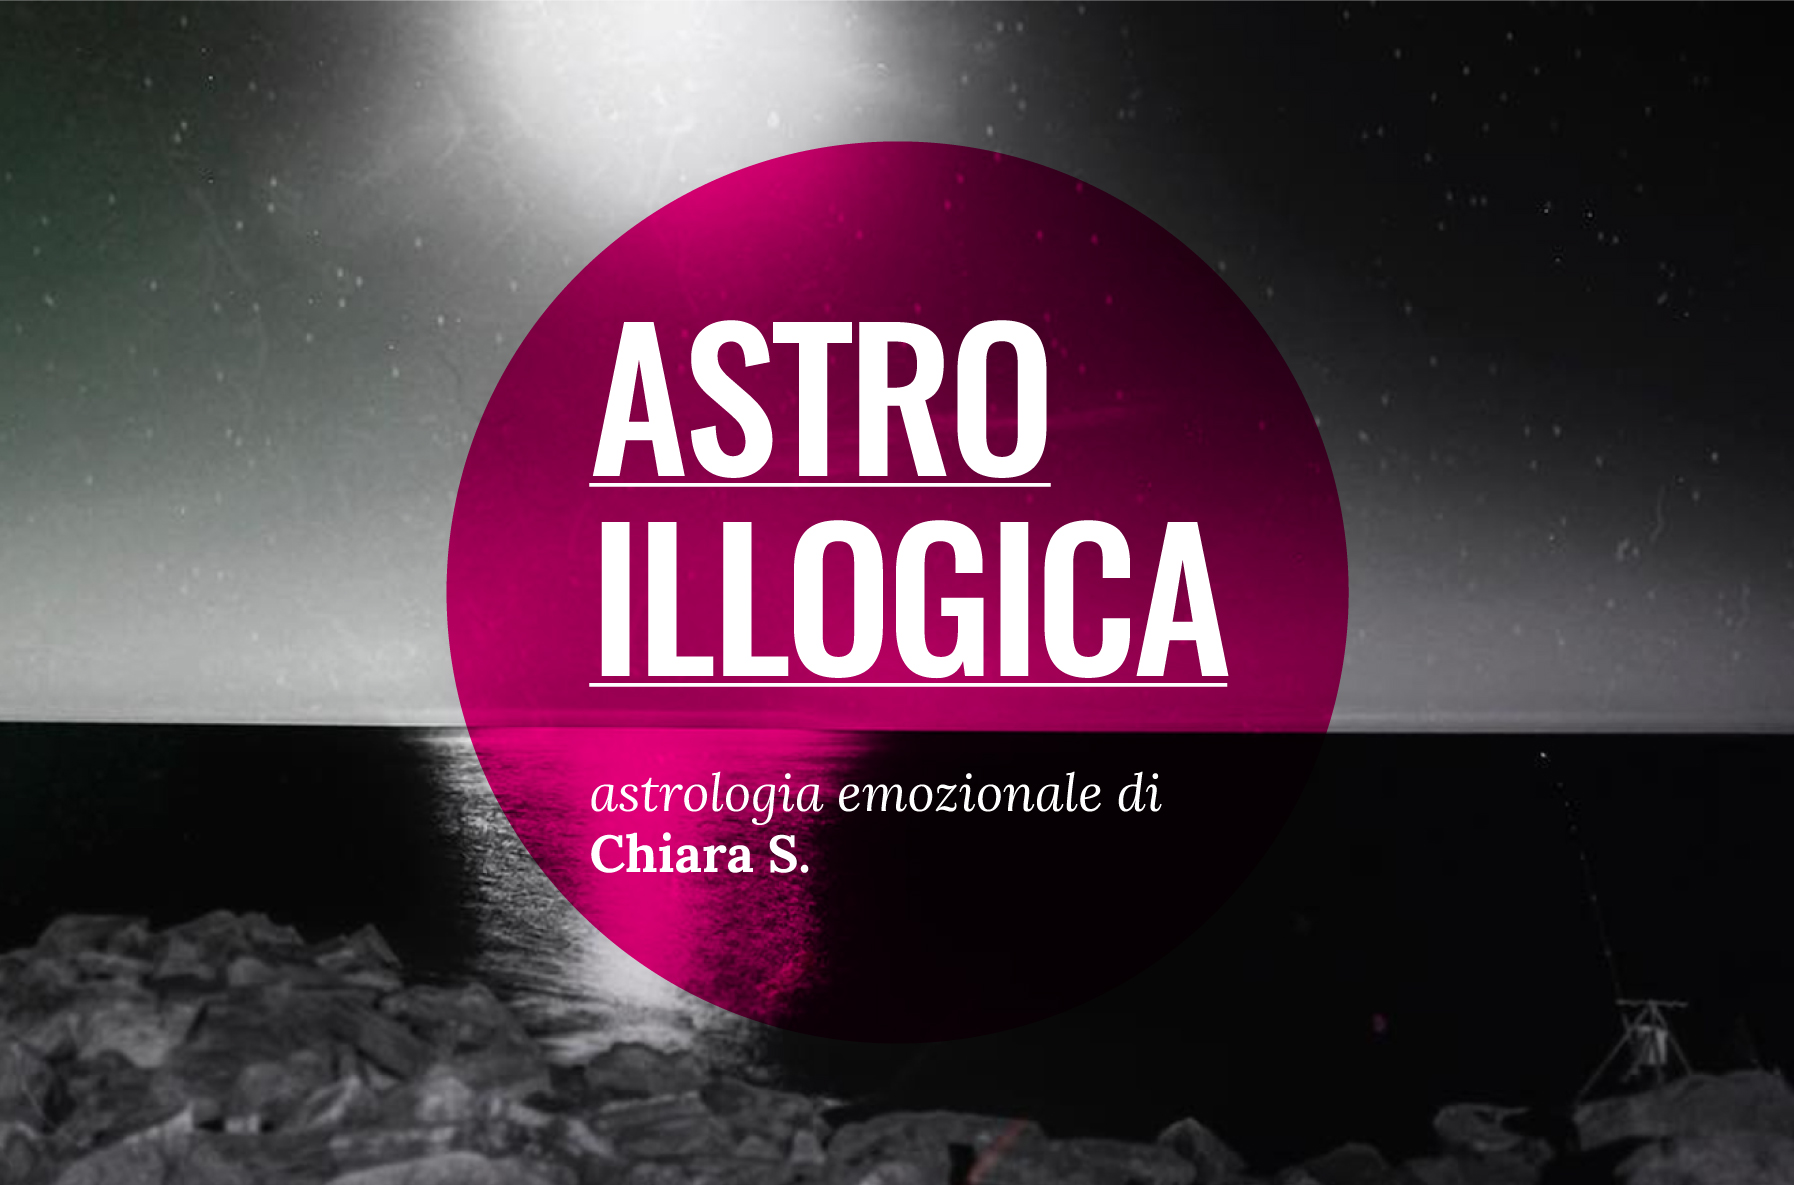 ASTRO-ILLOGICA, Astrologia intuitiva ed emozionale